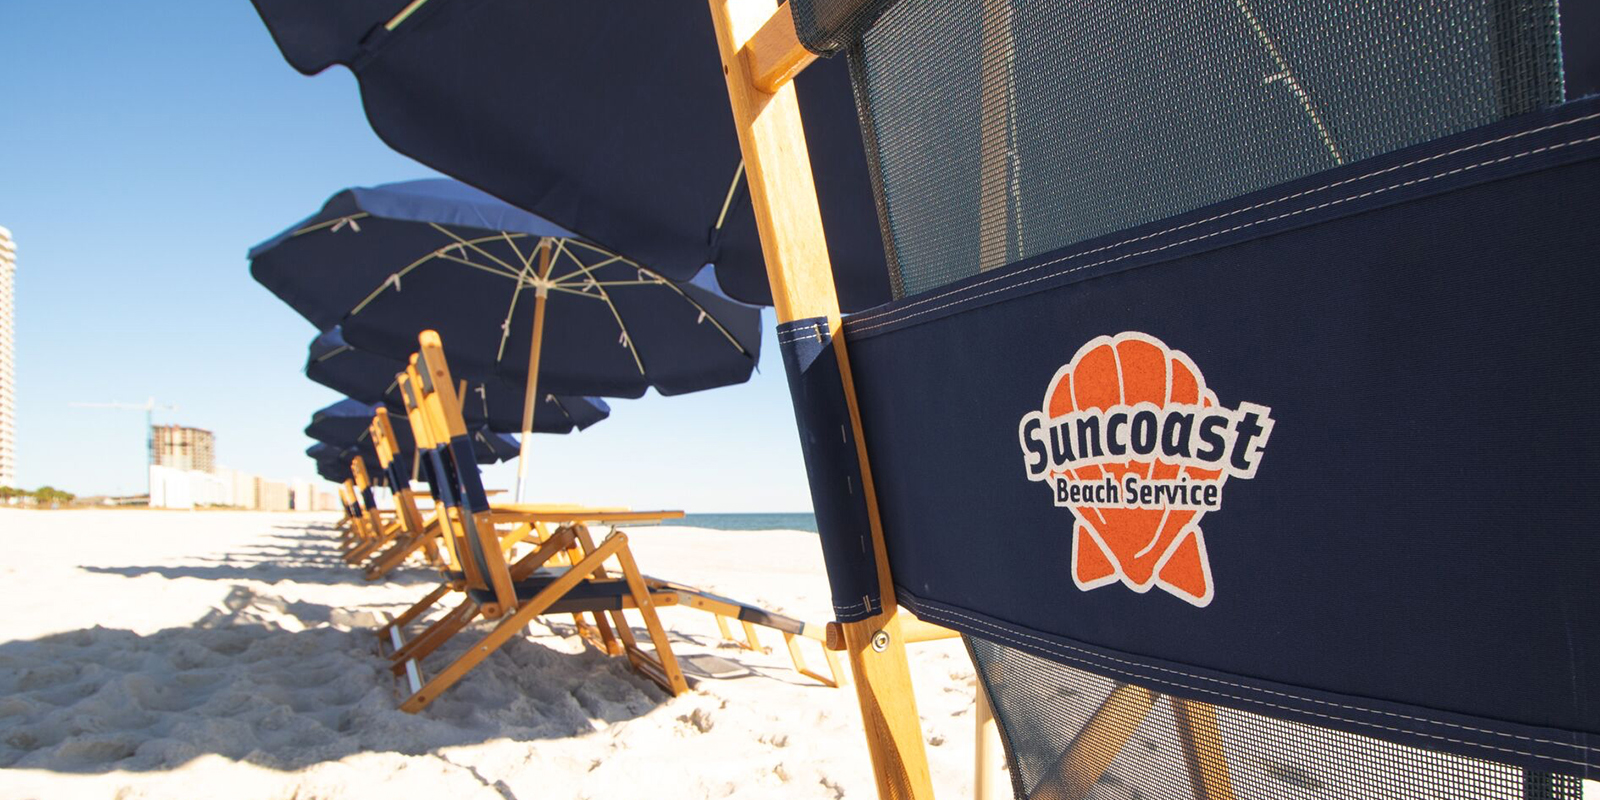 Employment at Suncoast Beach Service